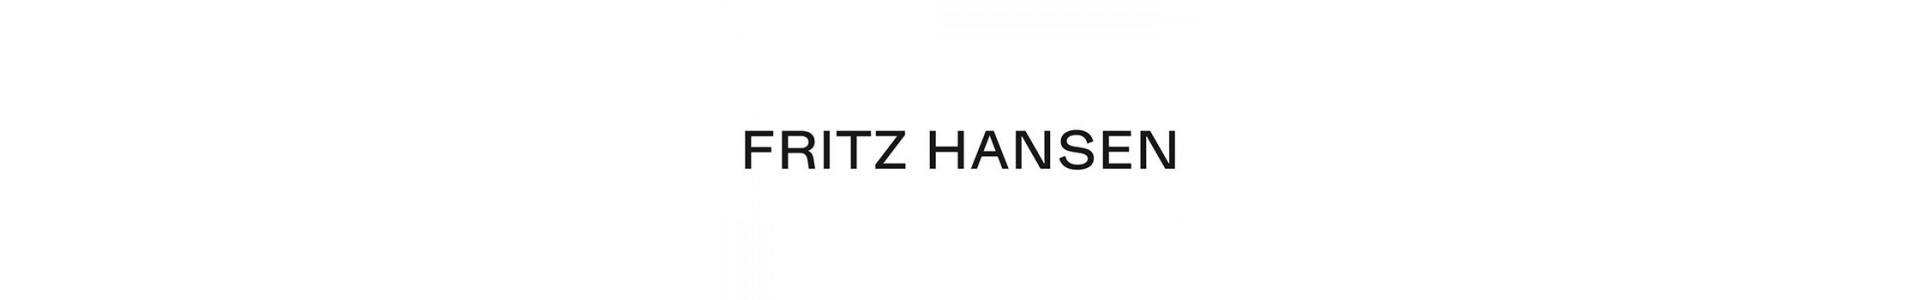 Fritz Hansen : Catálogo de productos Fritz Hansen  y Fritz Hansen Lighting